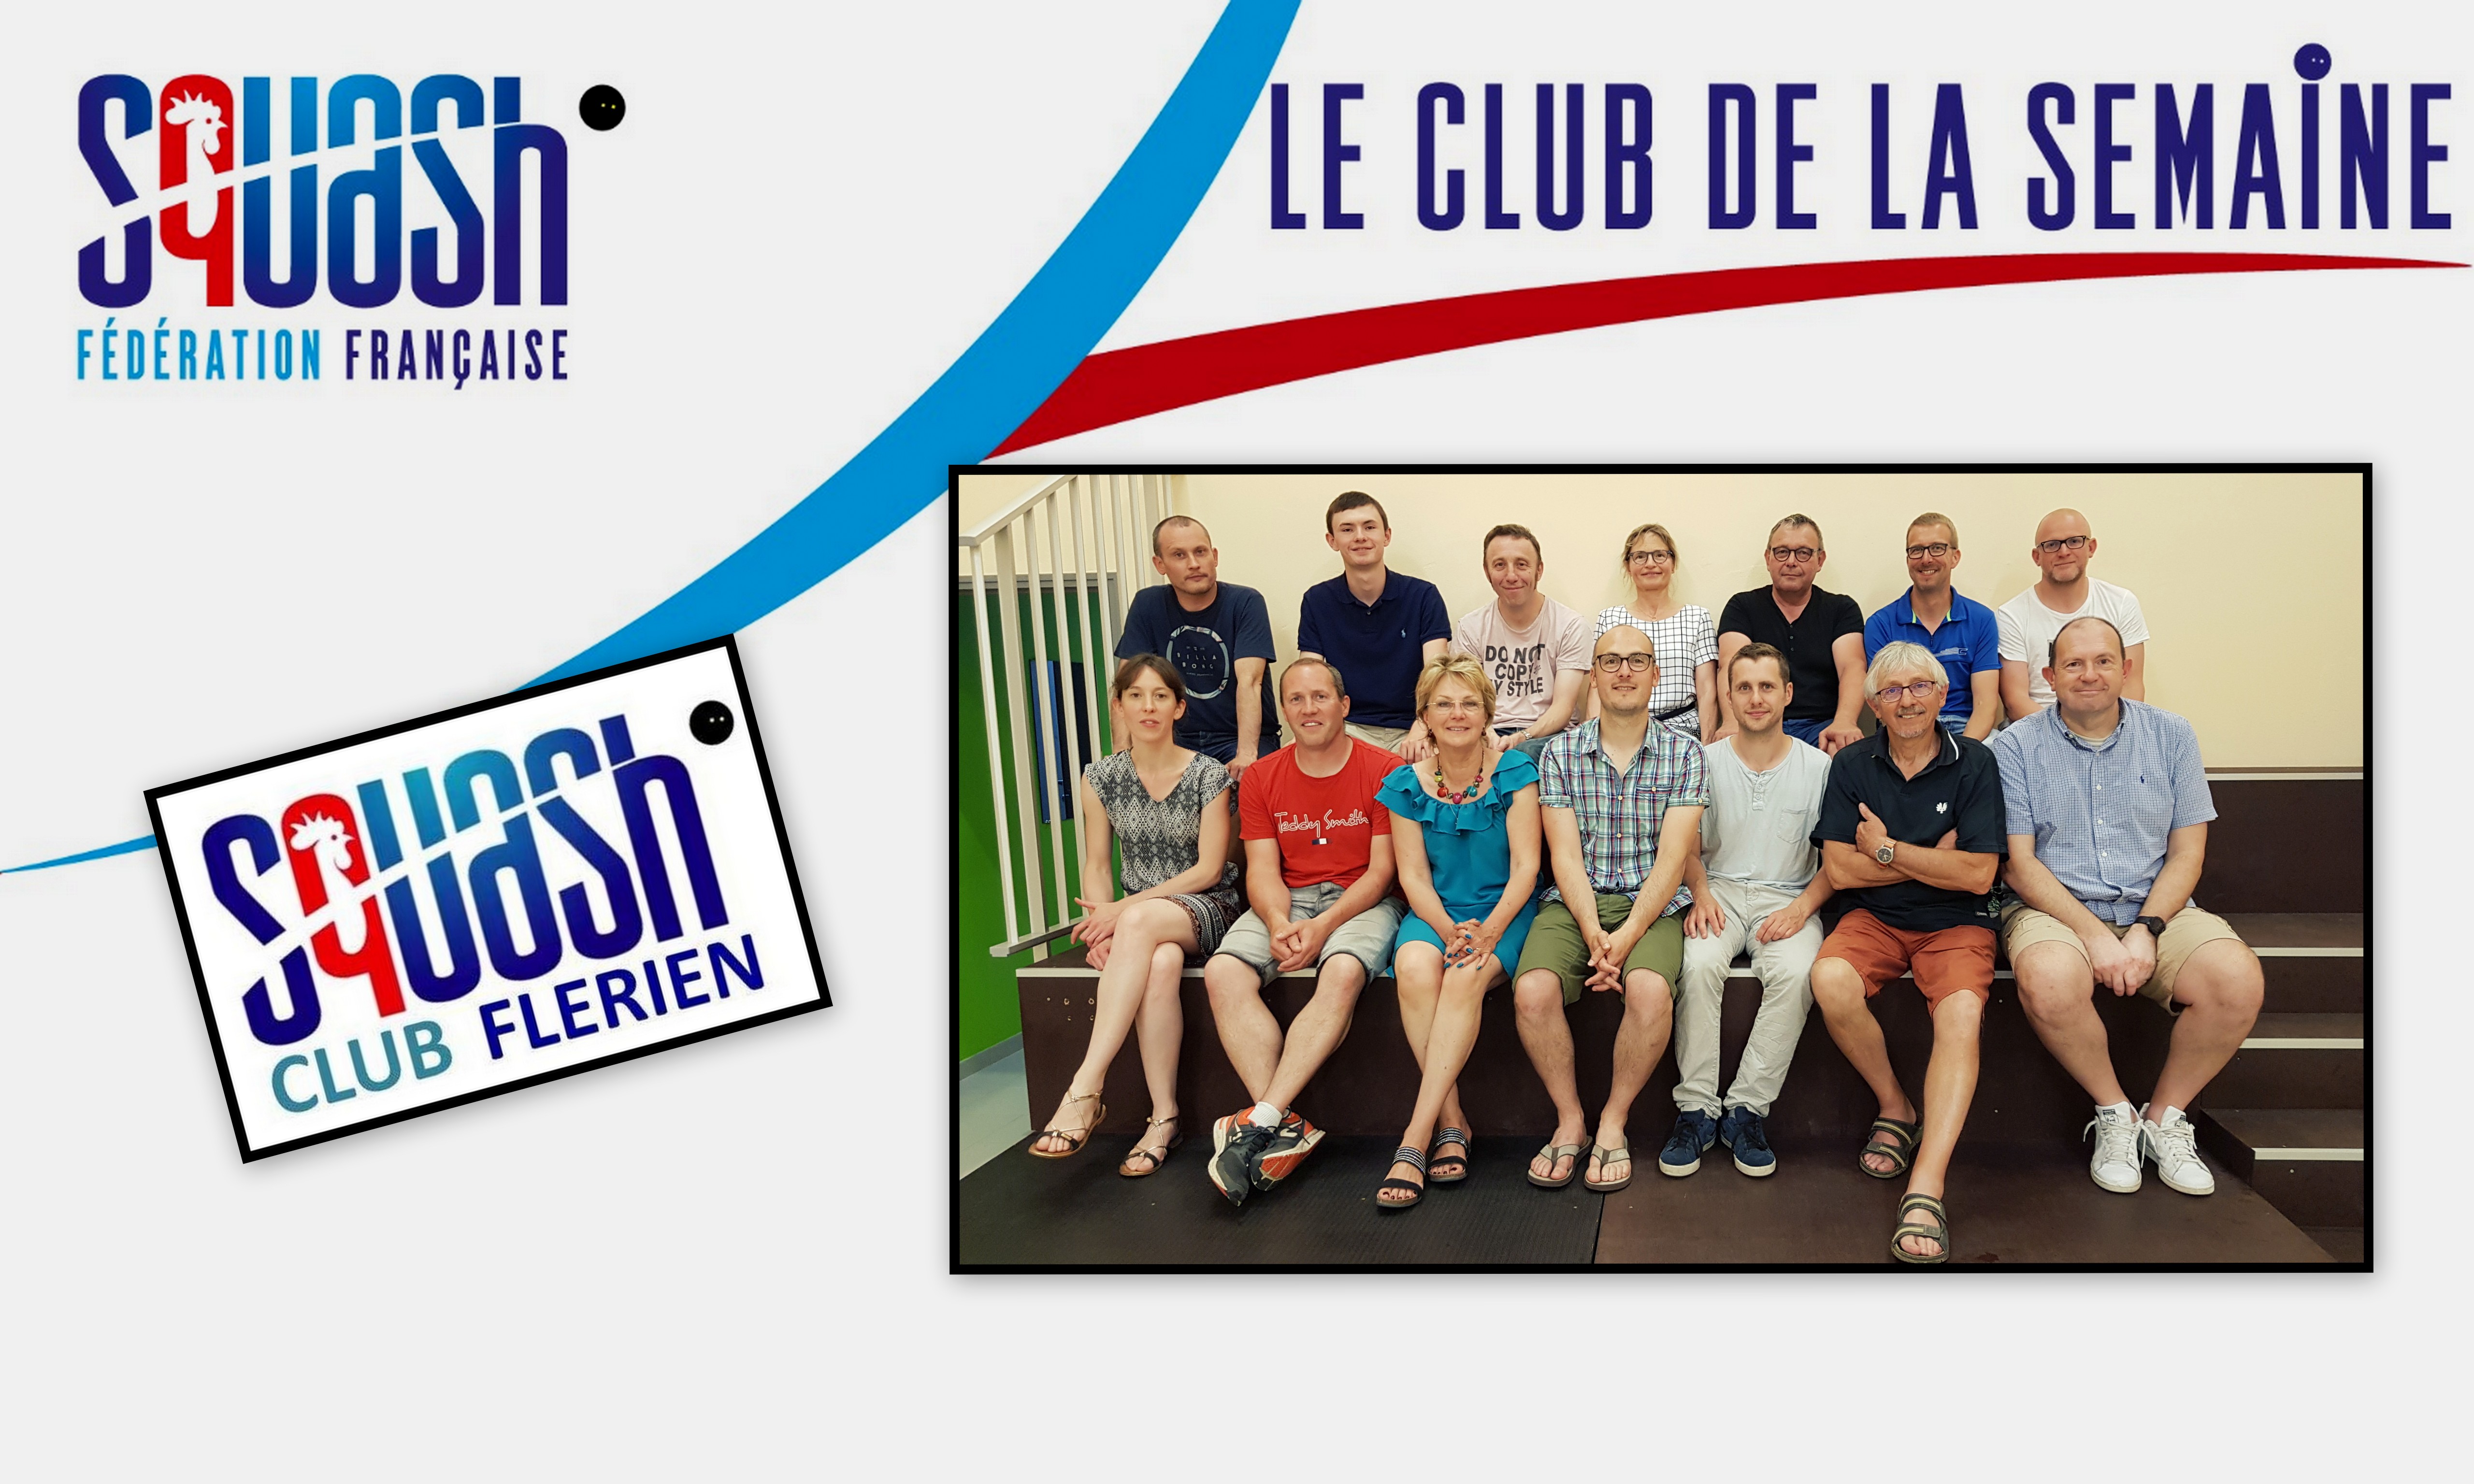 LE CLUB DE LA SEMAINE : SQUASH CLUB FLÉRIEN